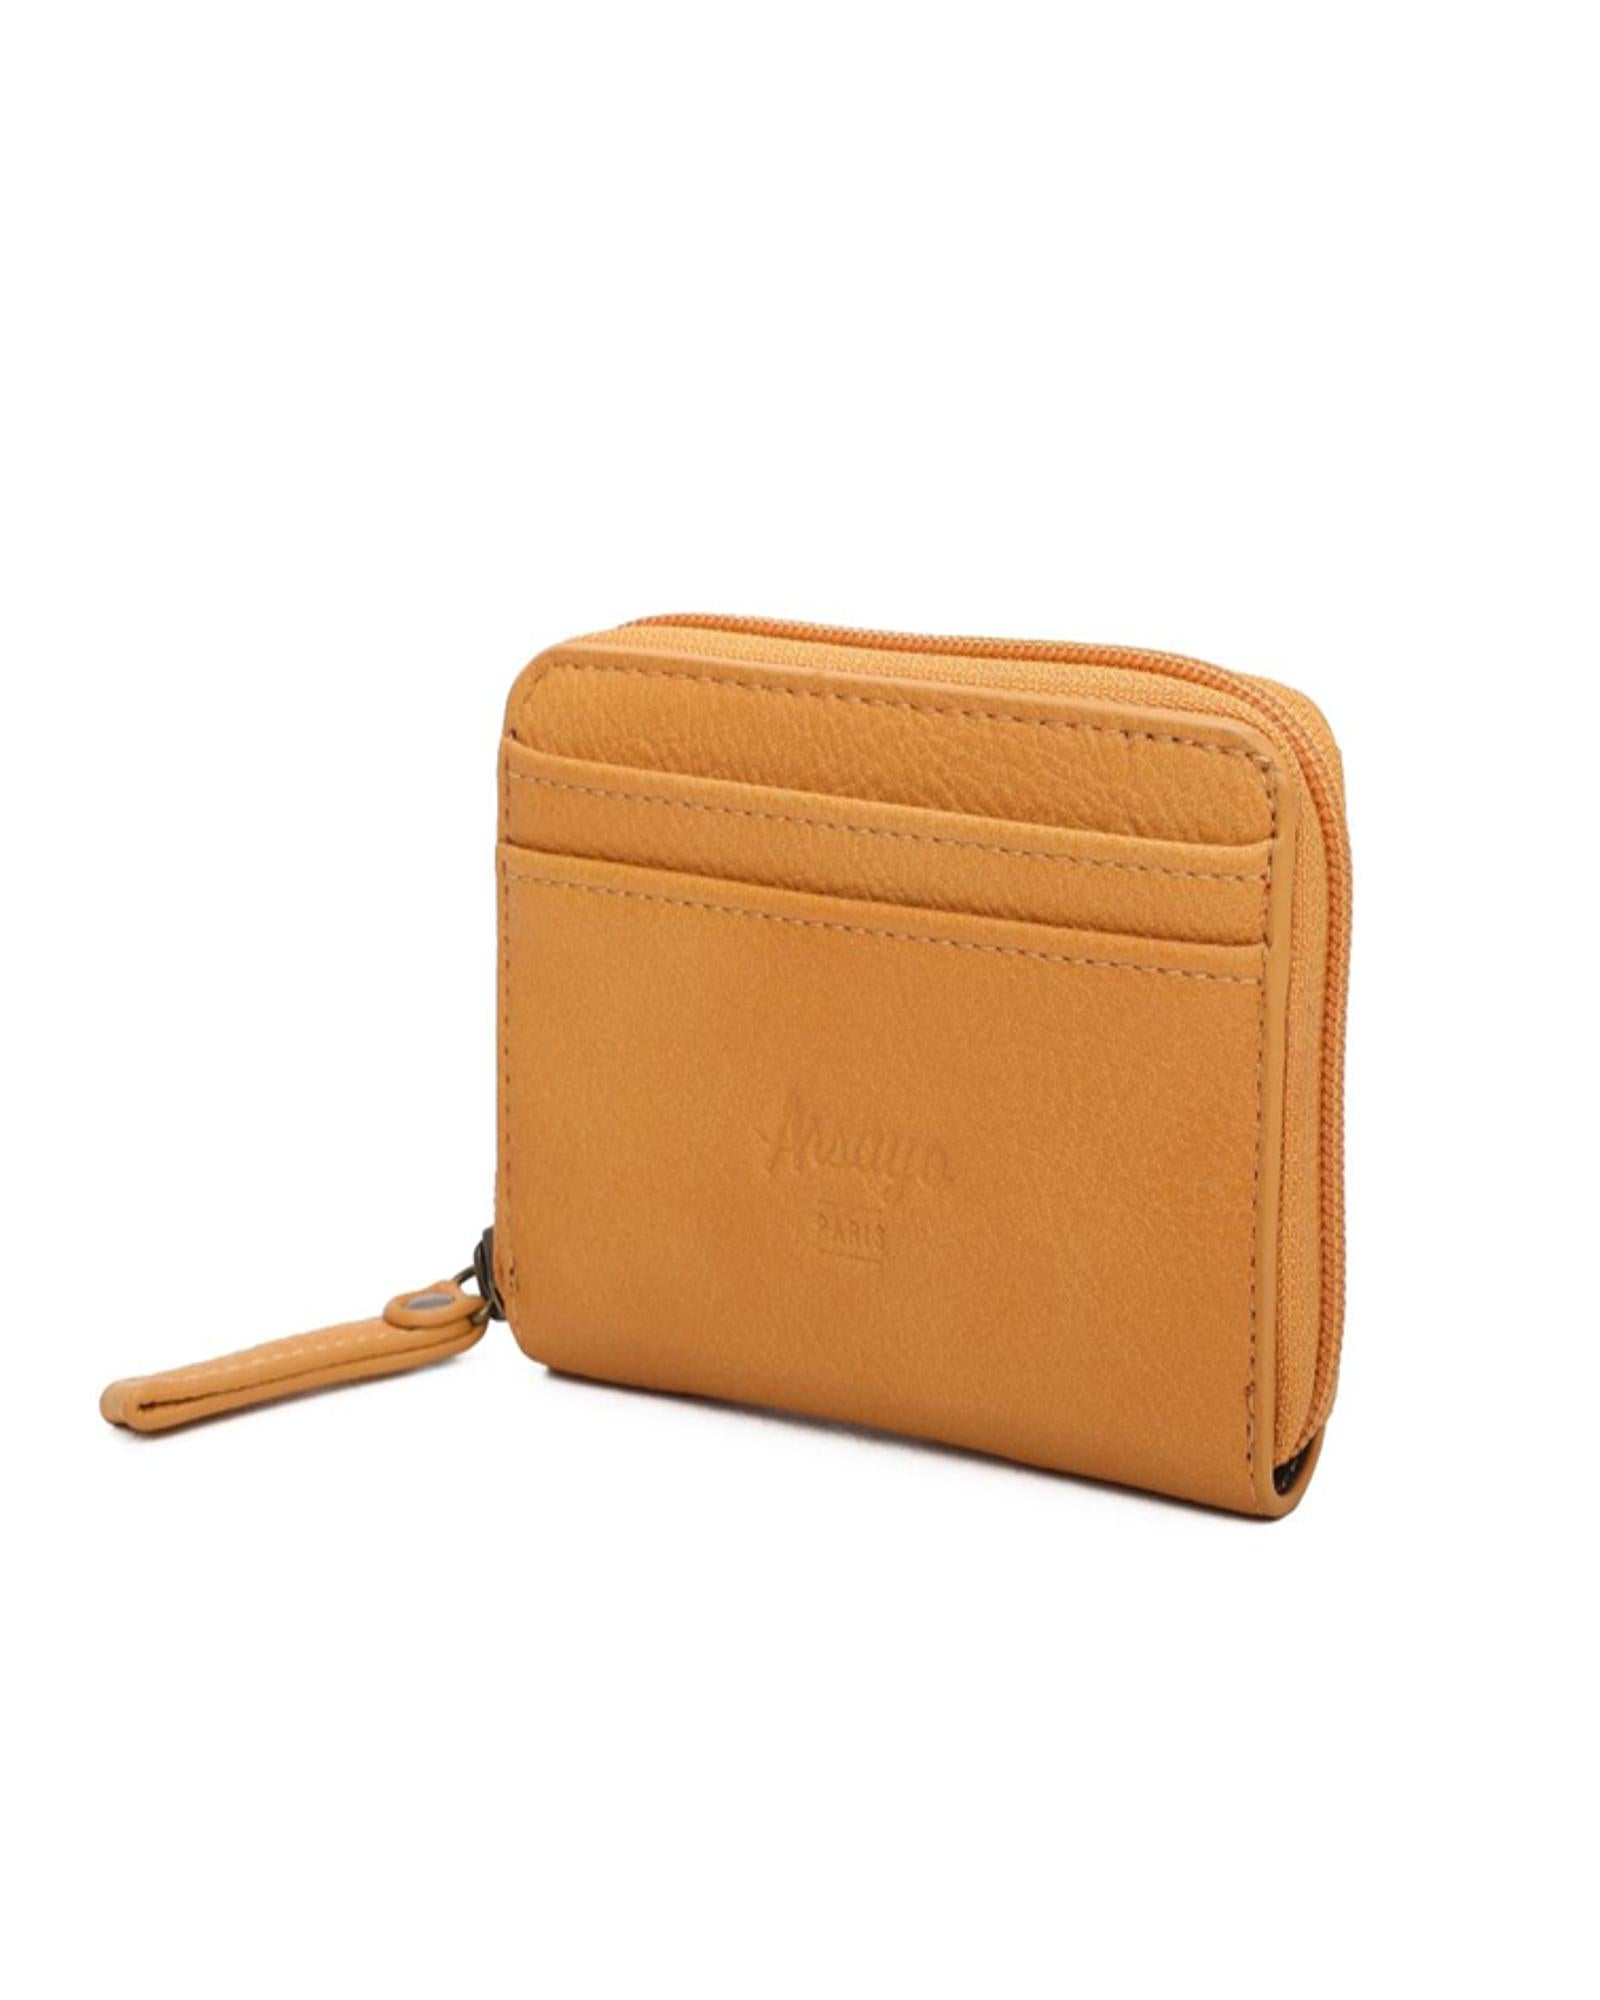 ARSAYO - ARSAYO Original Small Wallet | Yellow Mustard